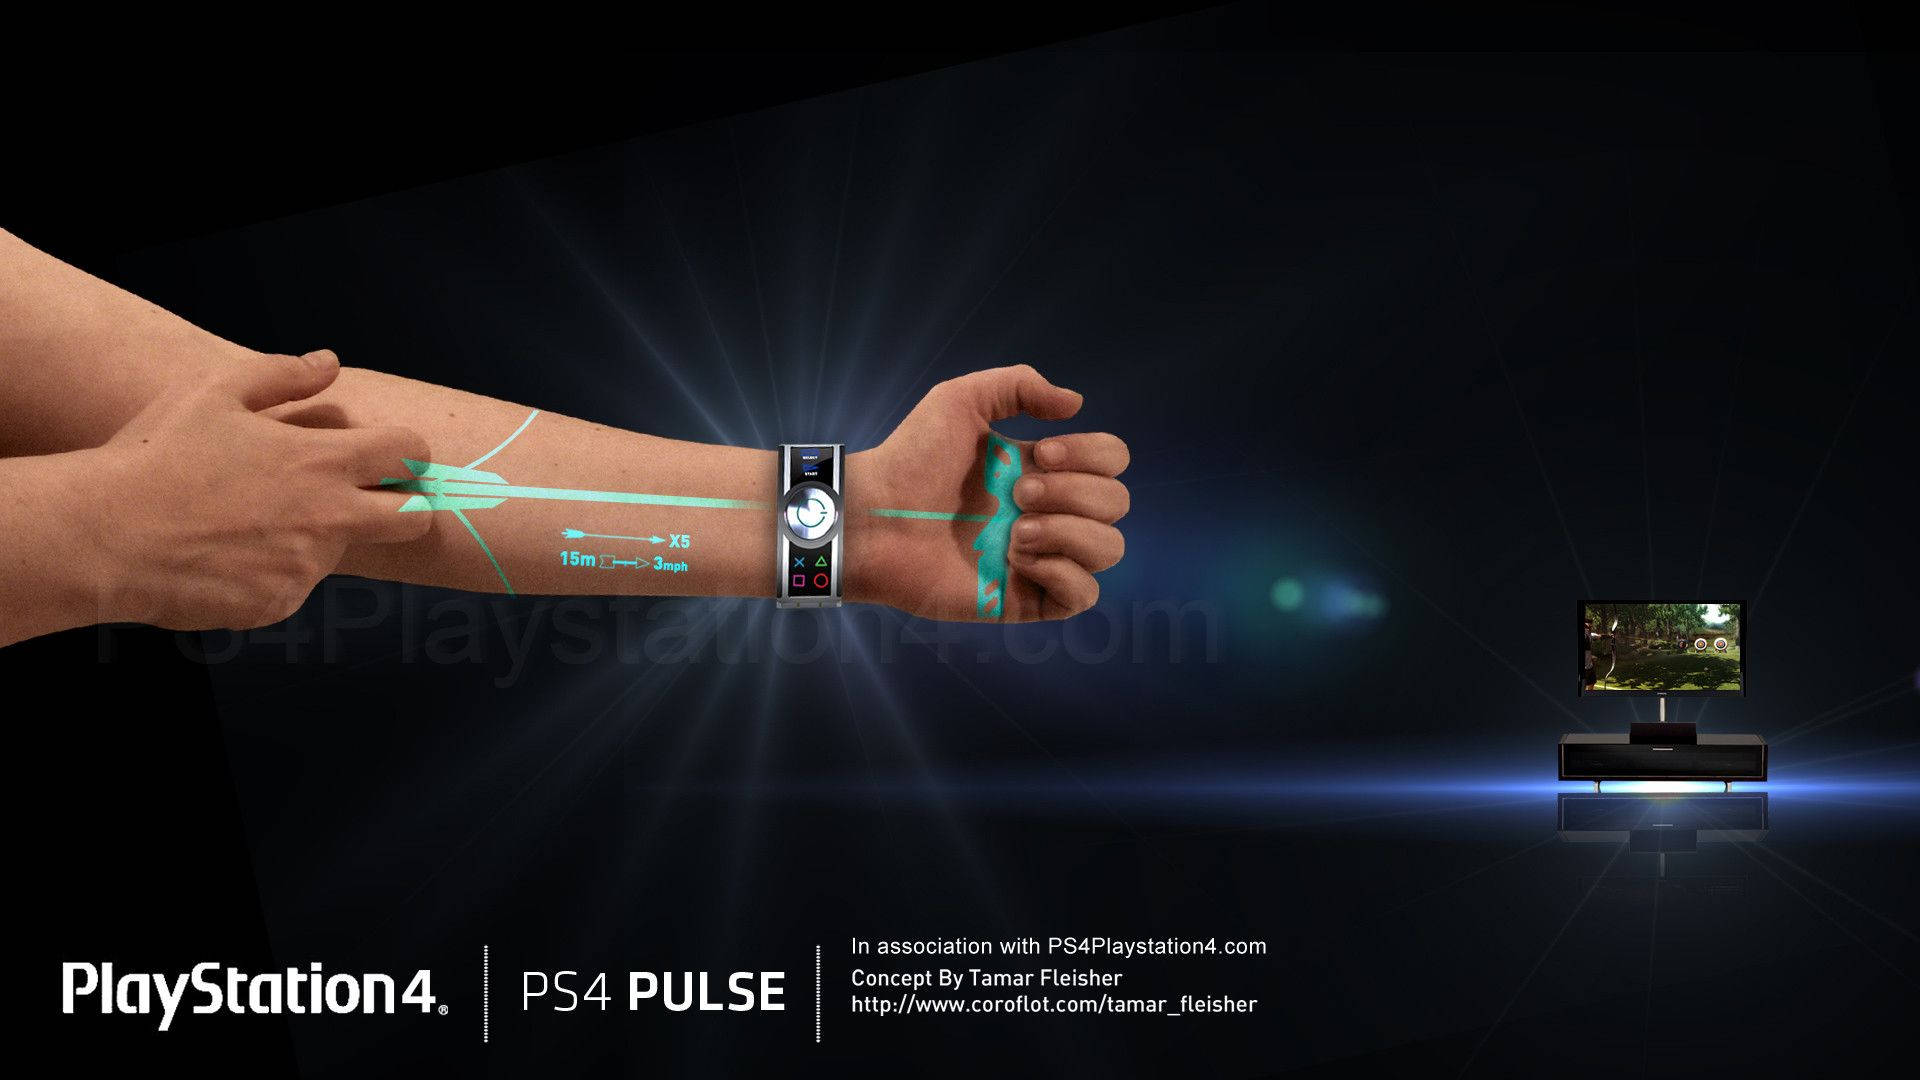 PS4 Pulse controller by Tamar Fleisher HD wallpaper.